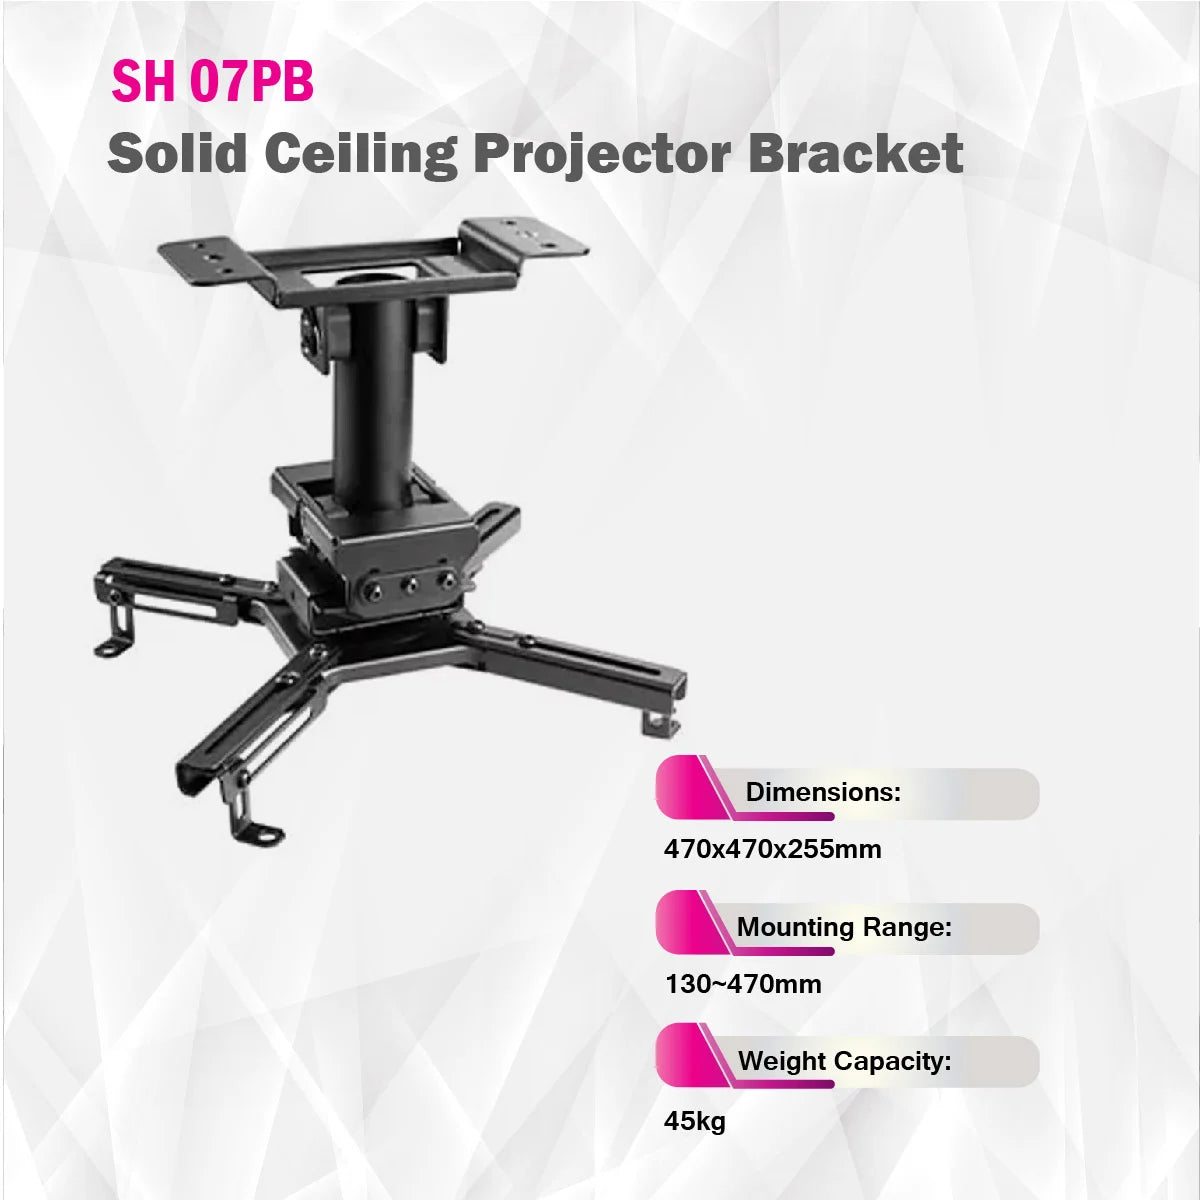 SkillTech - SH 07PB - Solid Ceiling Projector Bracket